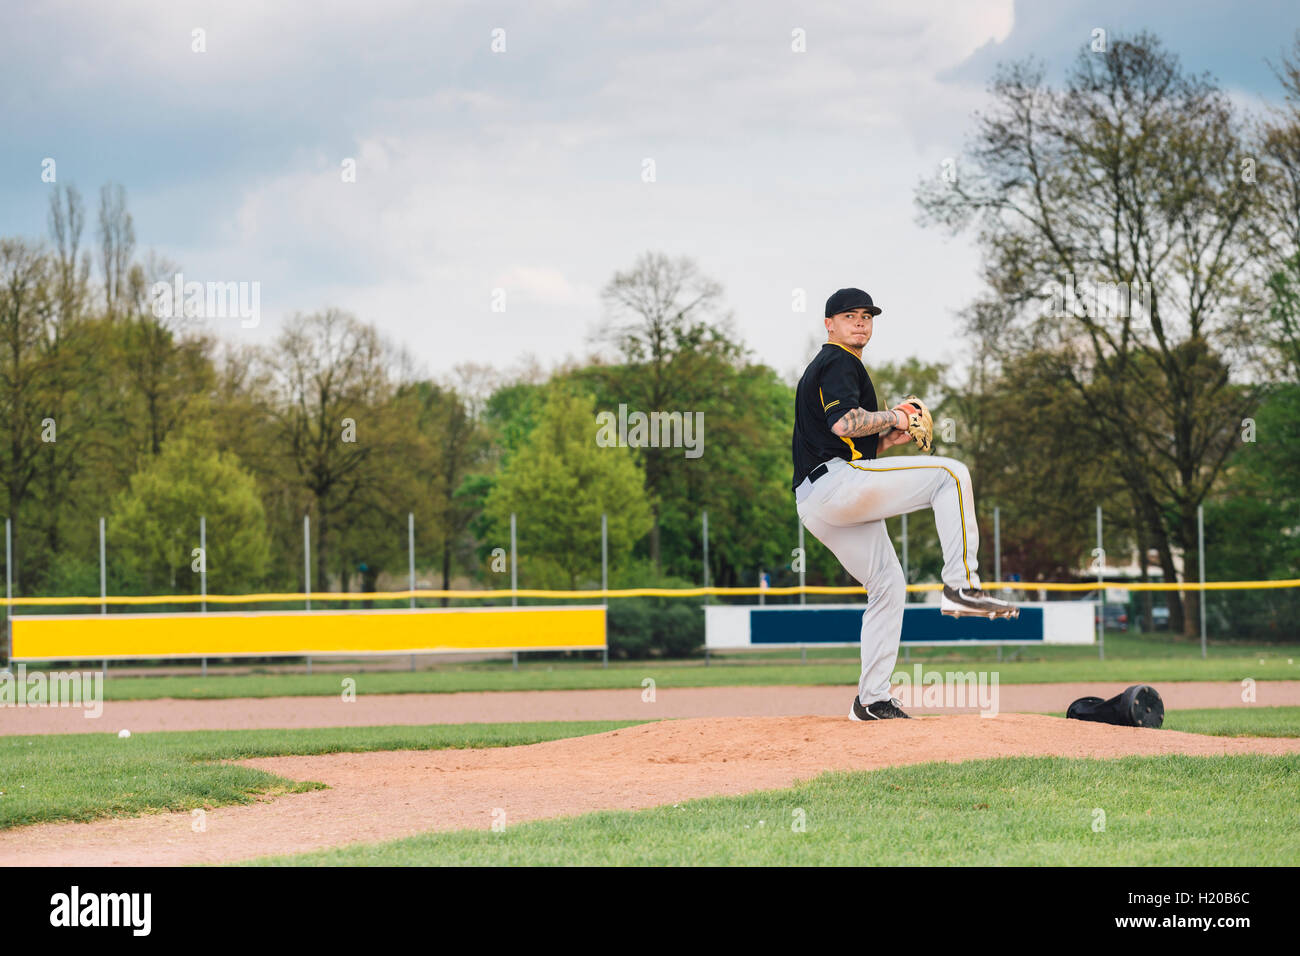 Baseball player on pitcher's mound Stock Photo